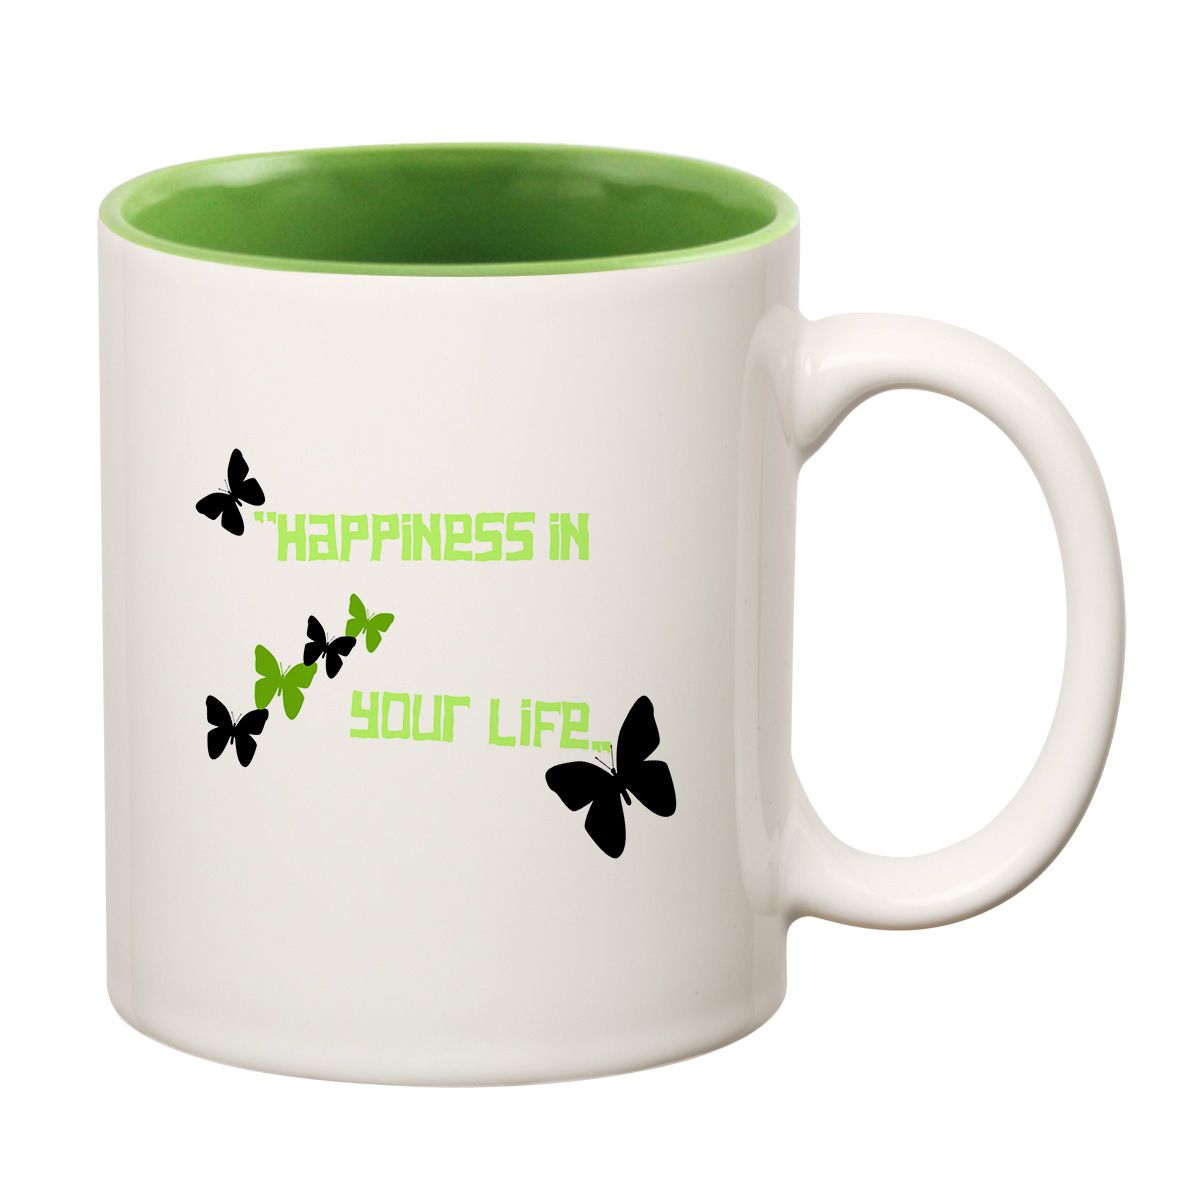 ORKA Coffee Mug Quotes Printed( Happiness Is Your Life) Theme 11 Oz   